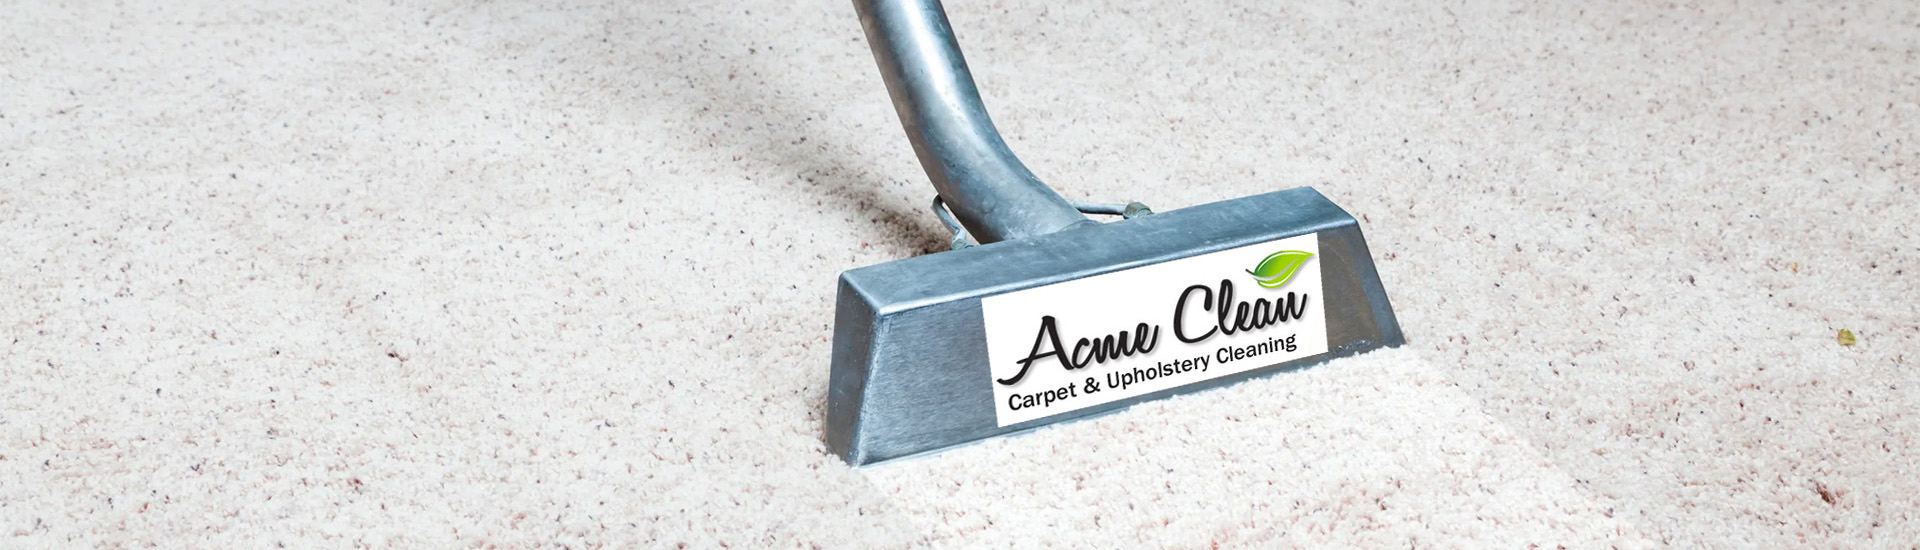 carpet cleaning service in denver